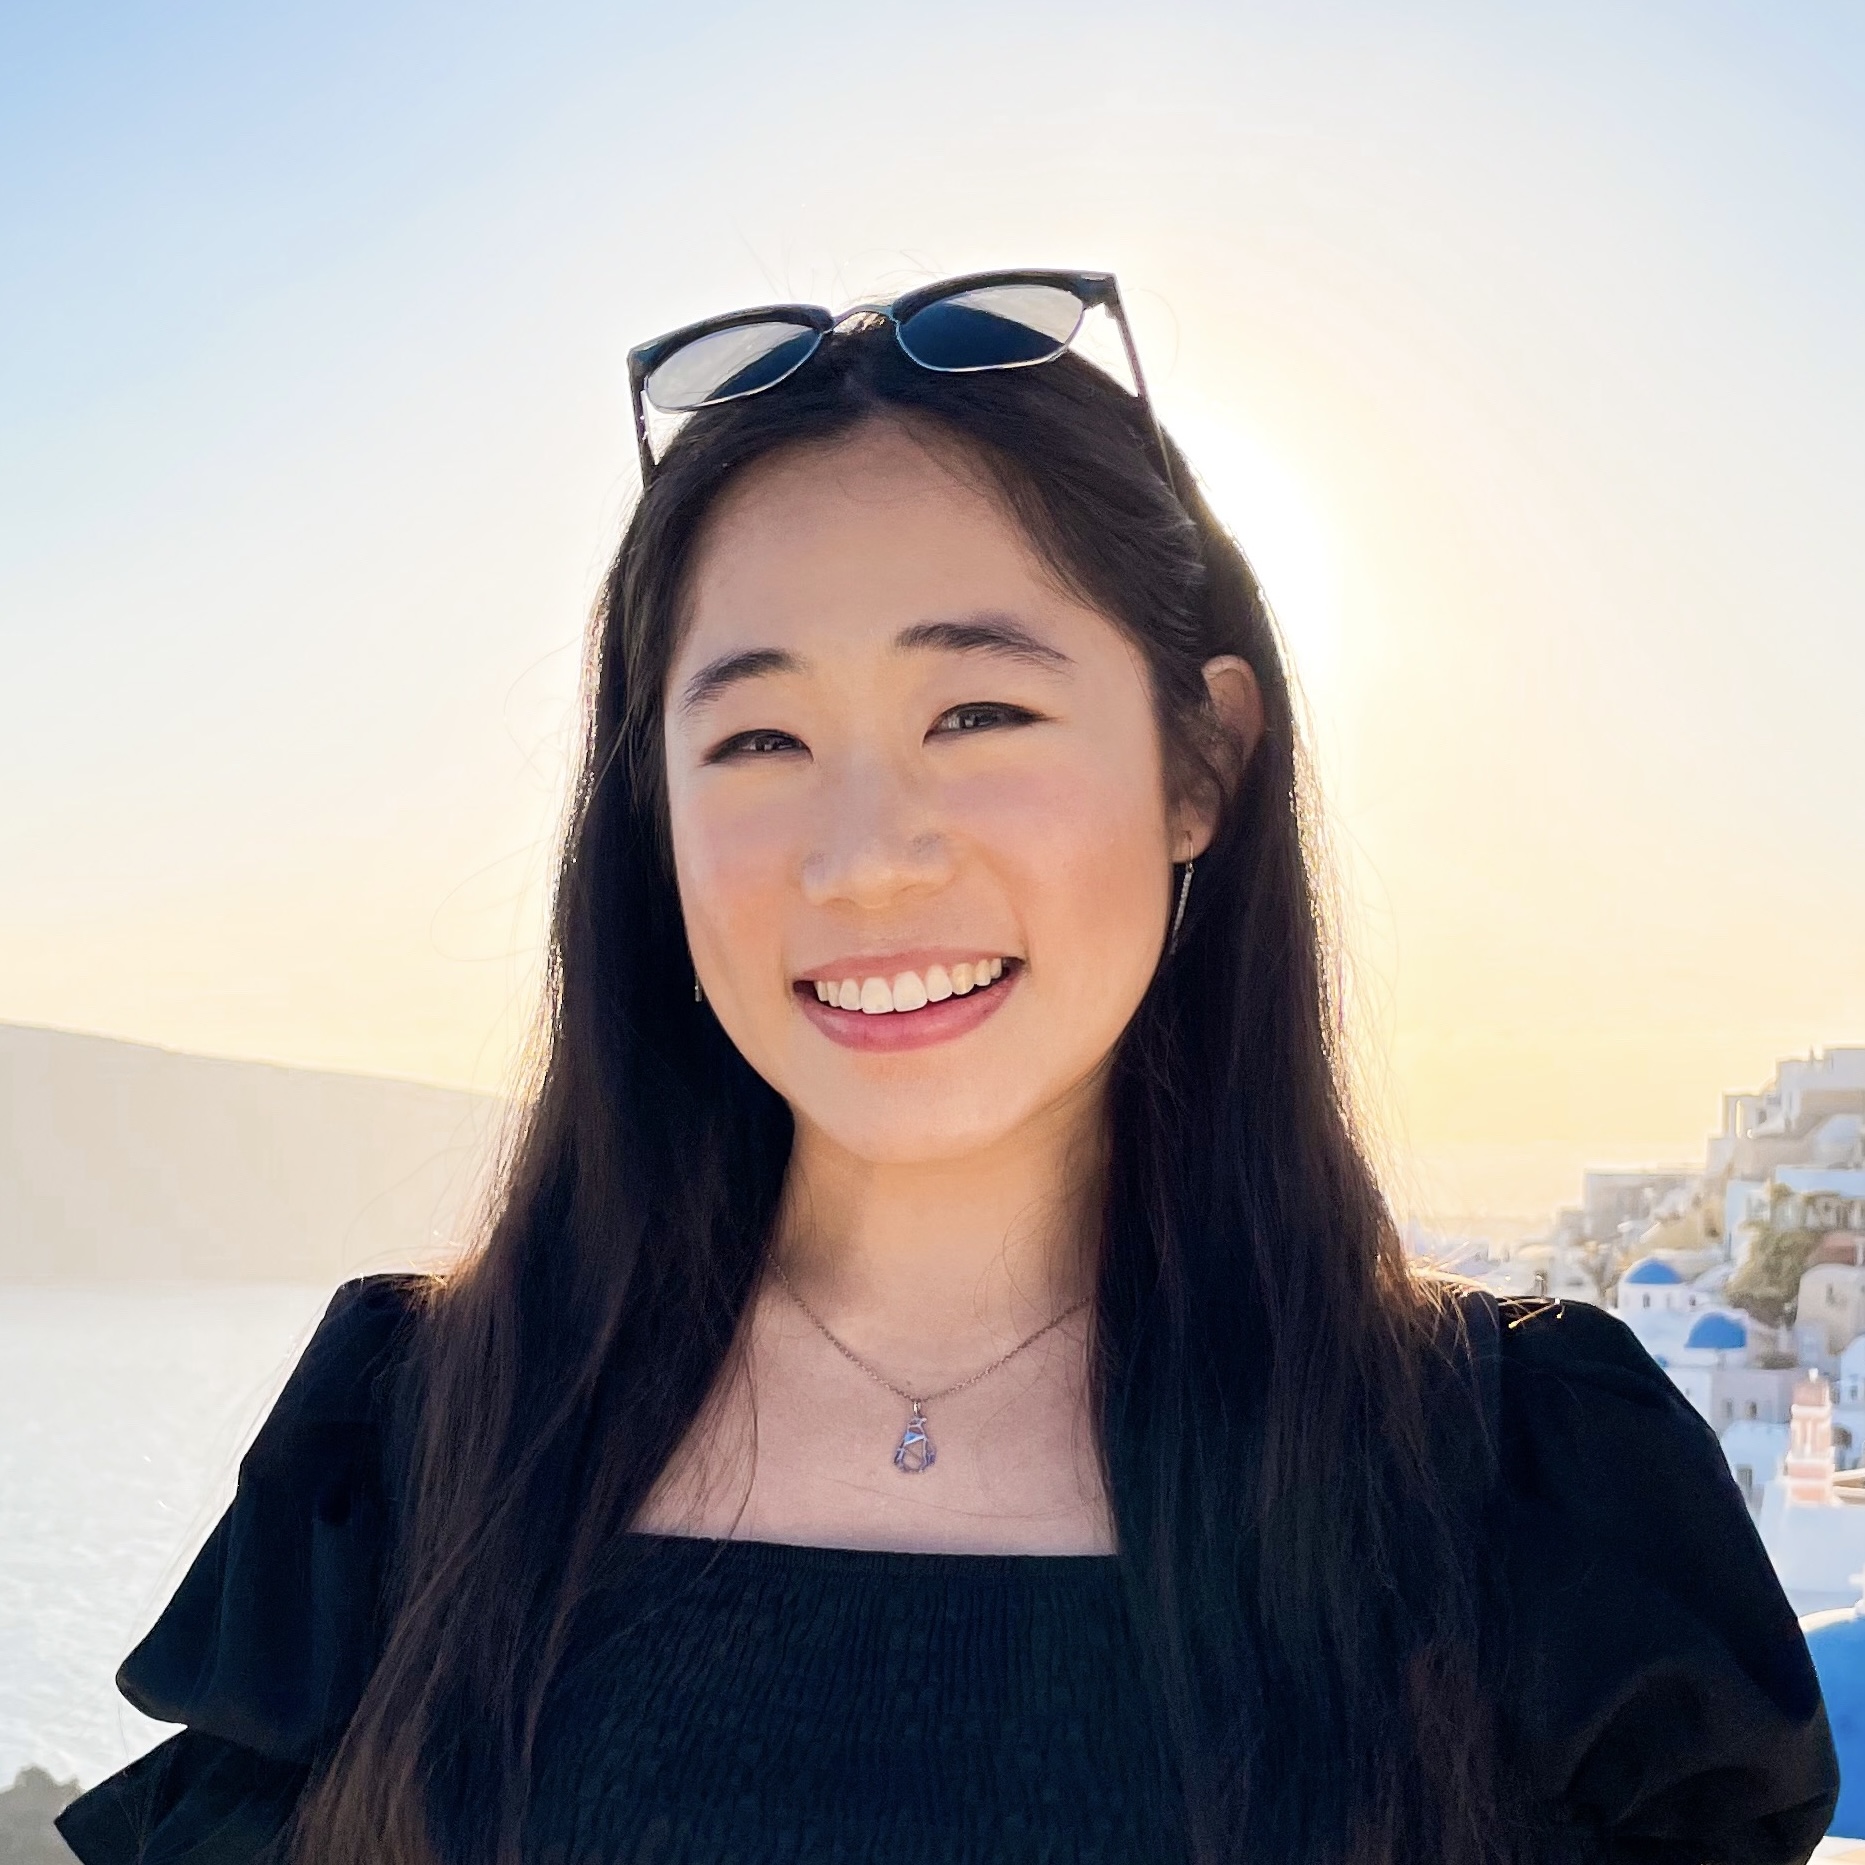 Headshot of Lucy Jiang, a Chinese American woman wearing a black shirt.